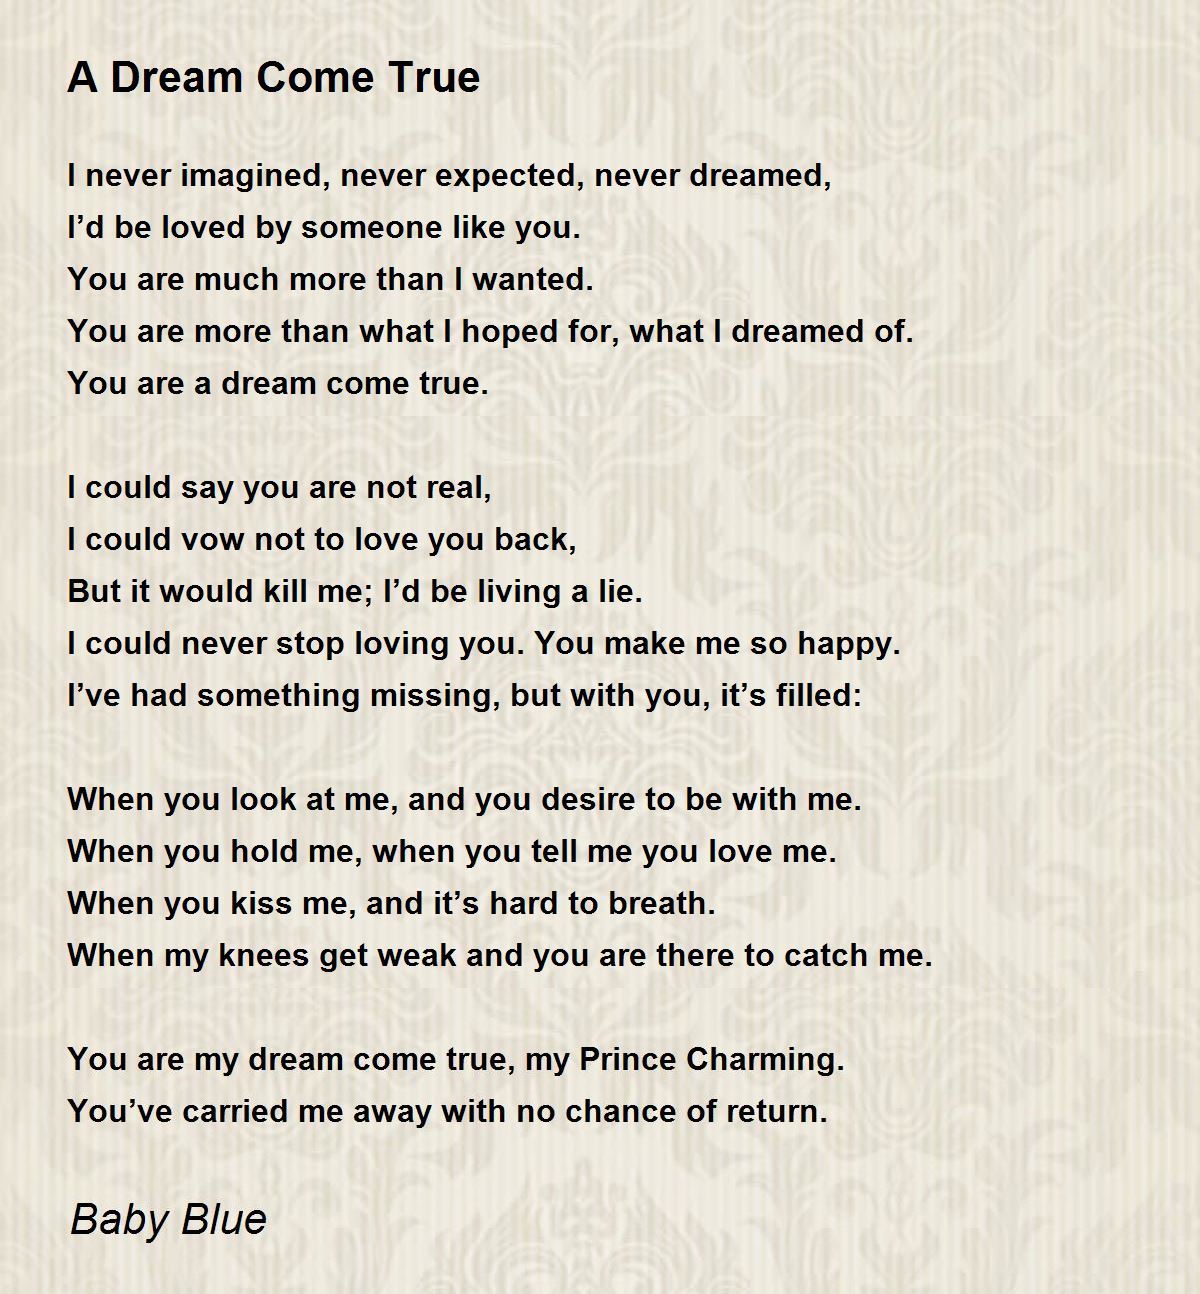 You are my dream come true poem